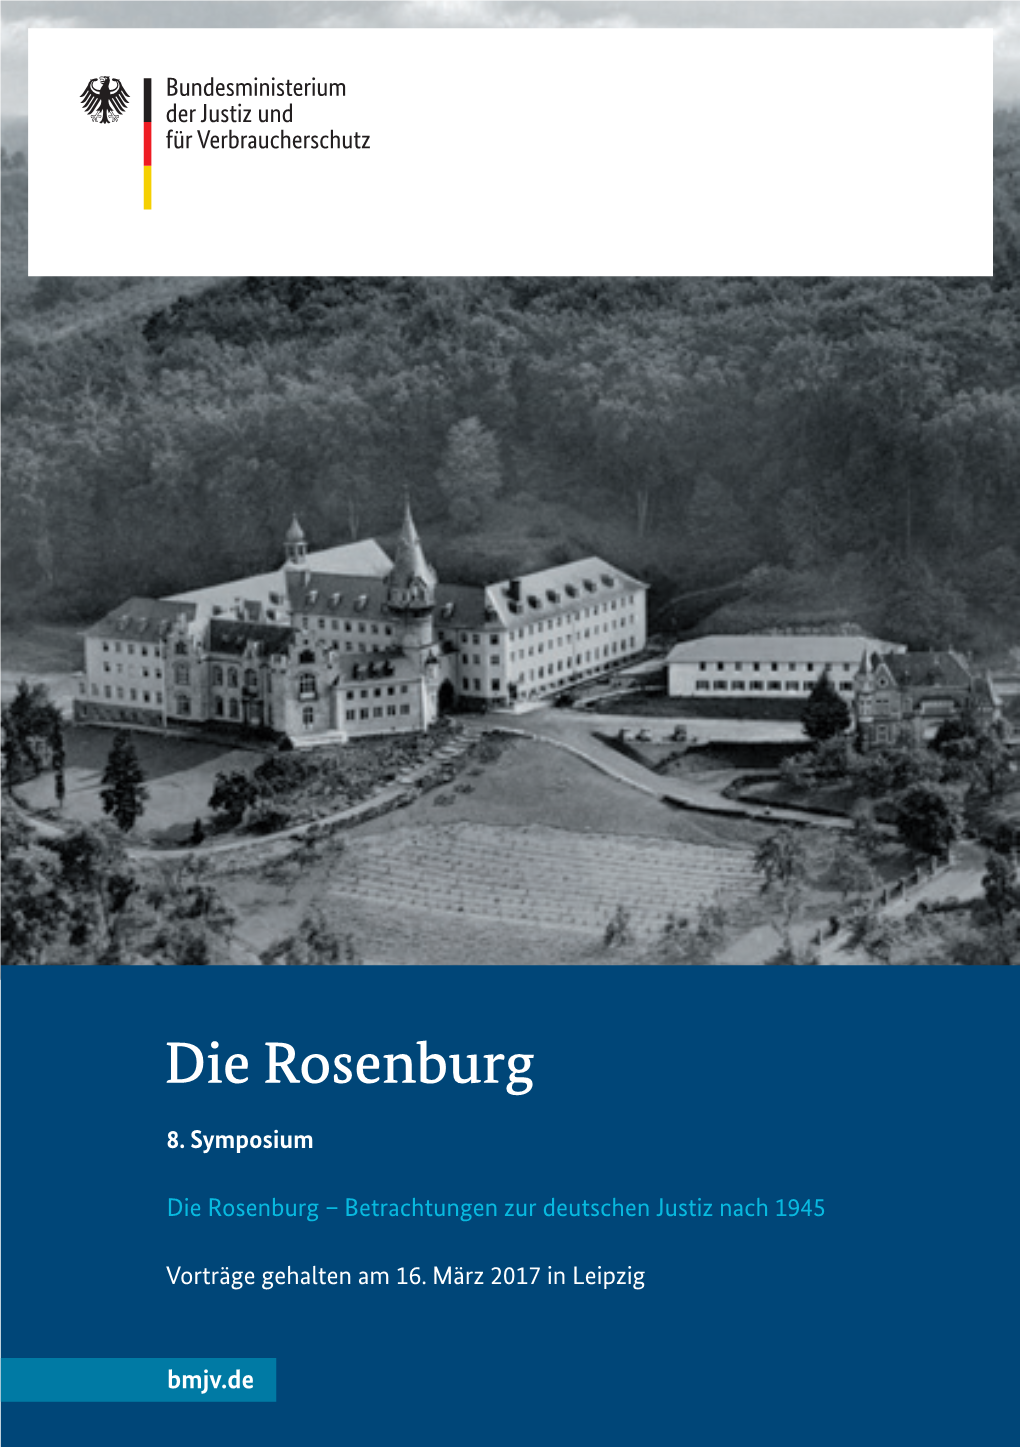 "Die Rosenburg